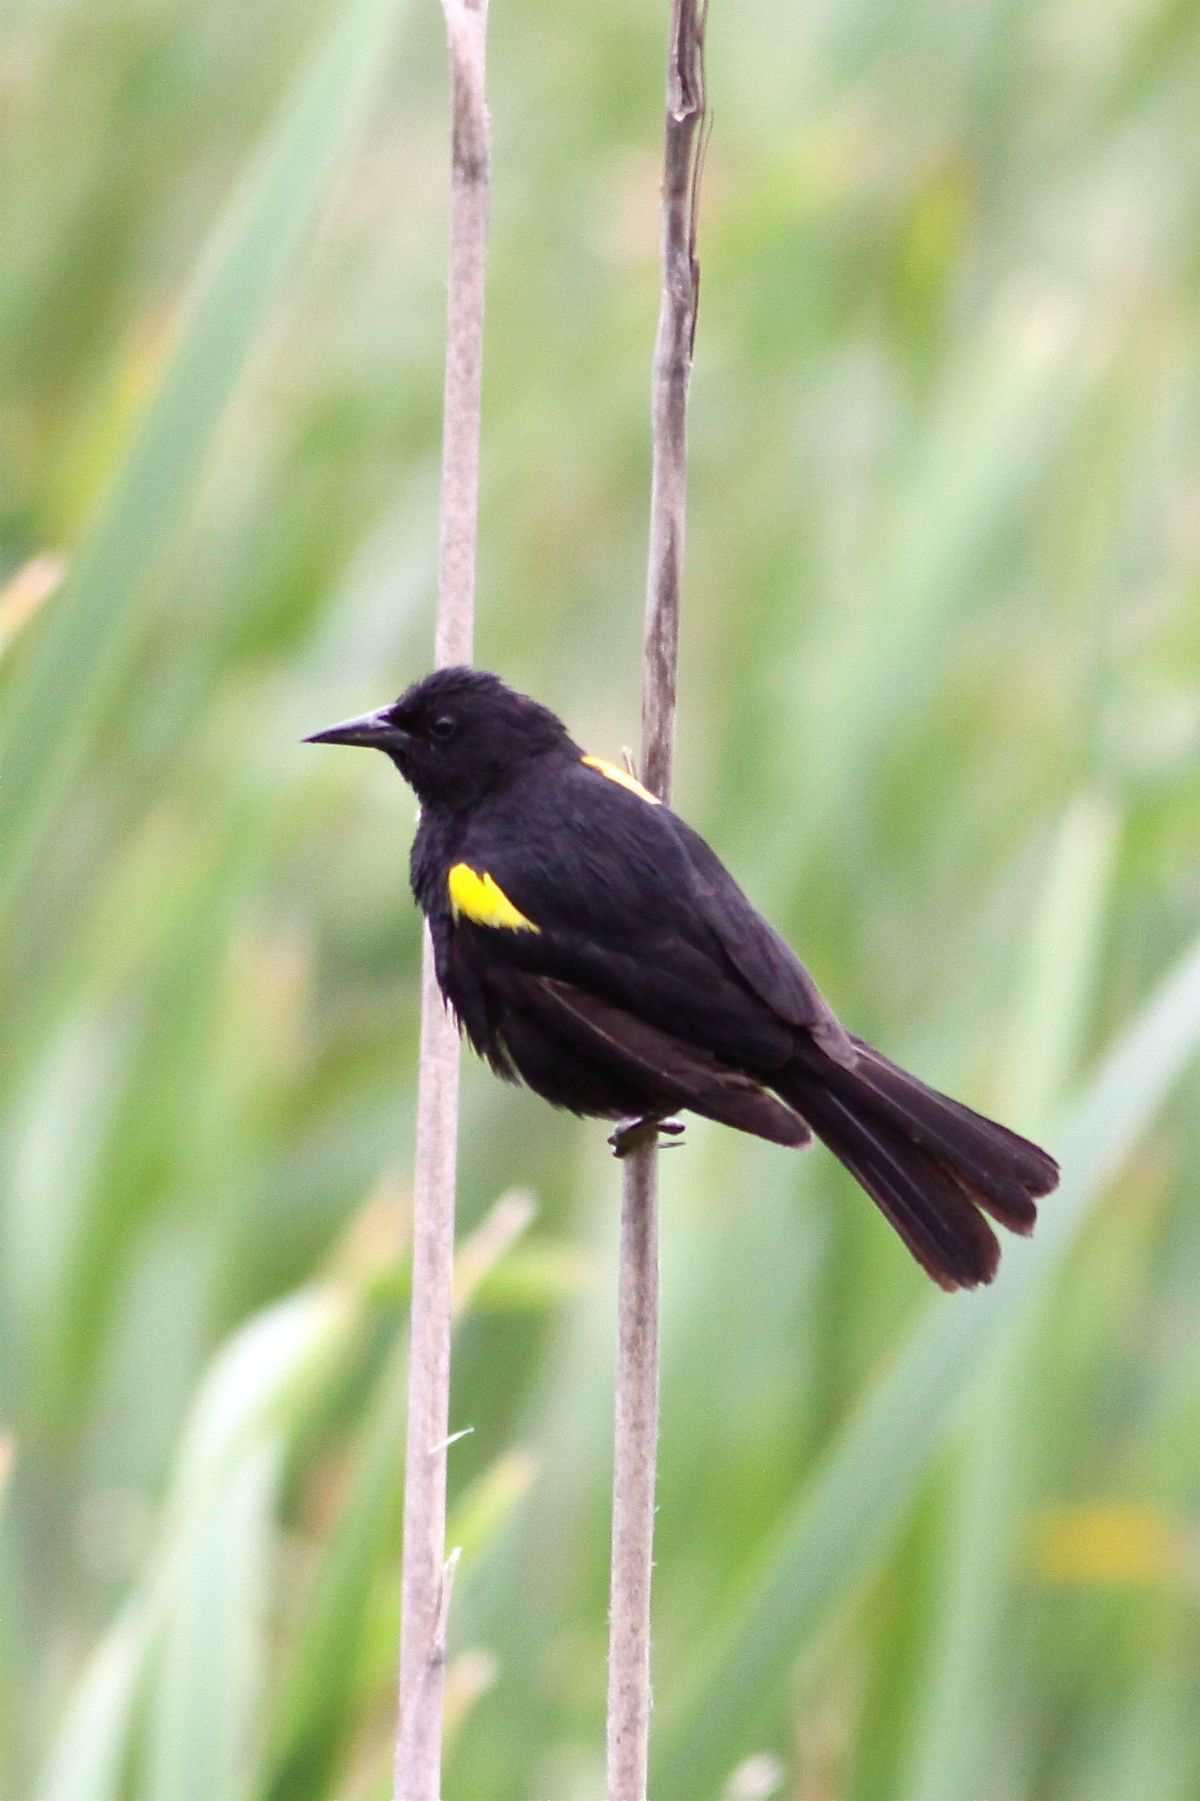 Yellow-winged blackbird - Wikipedia